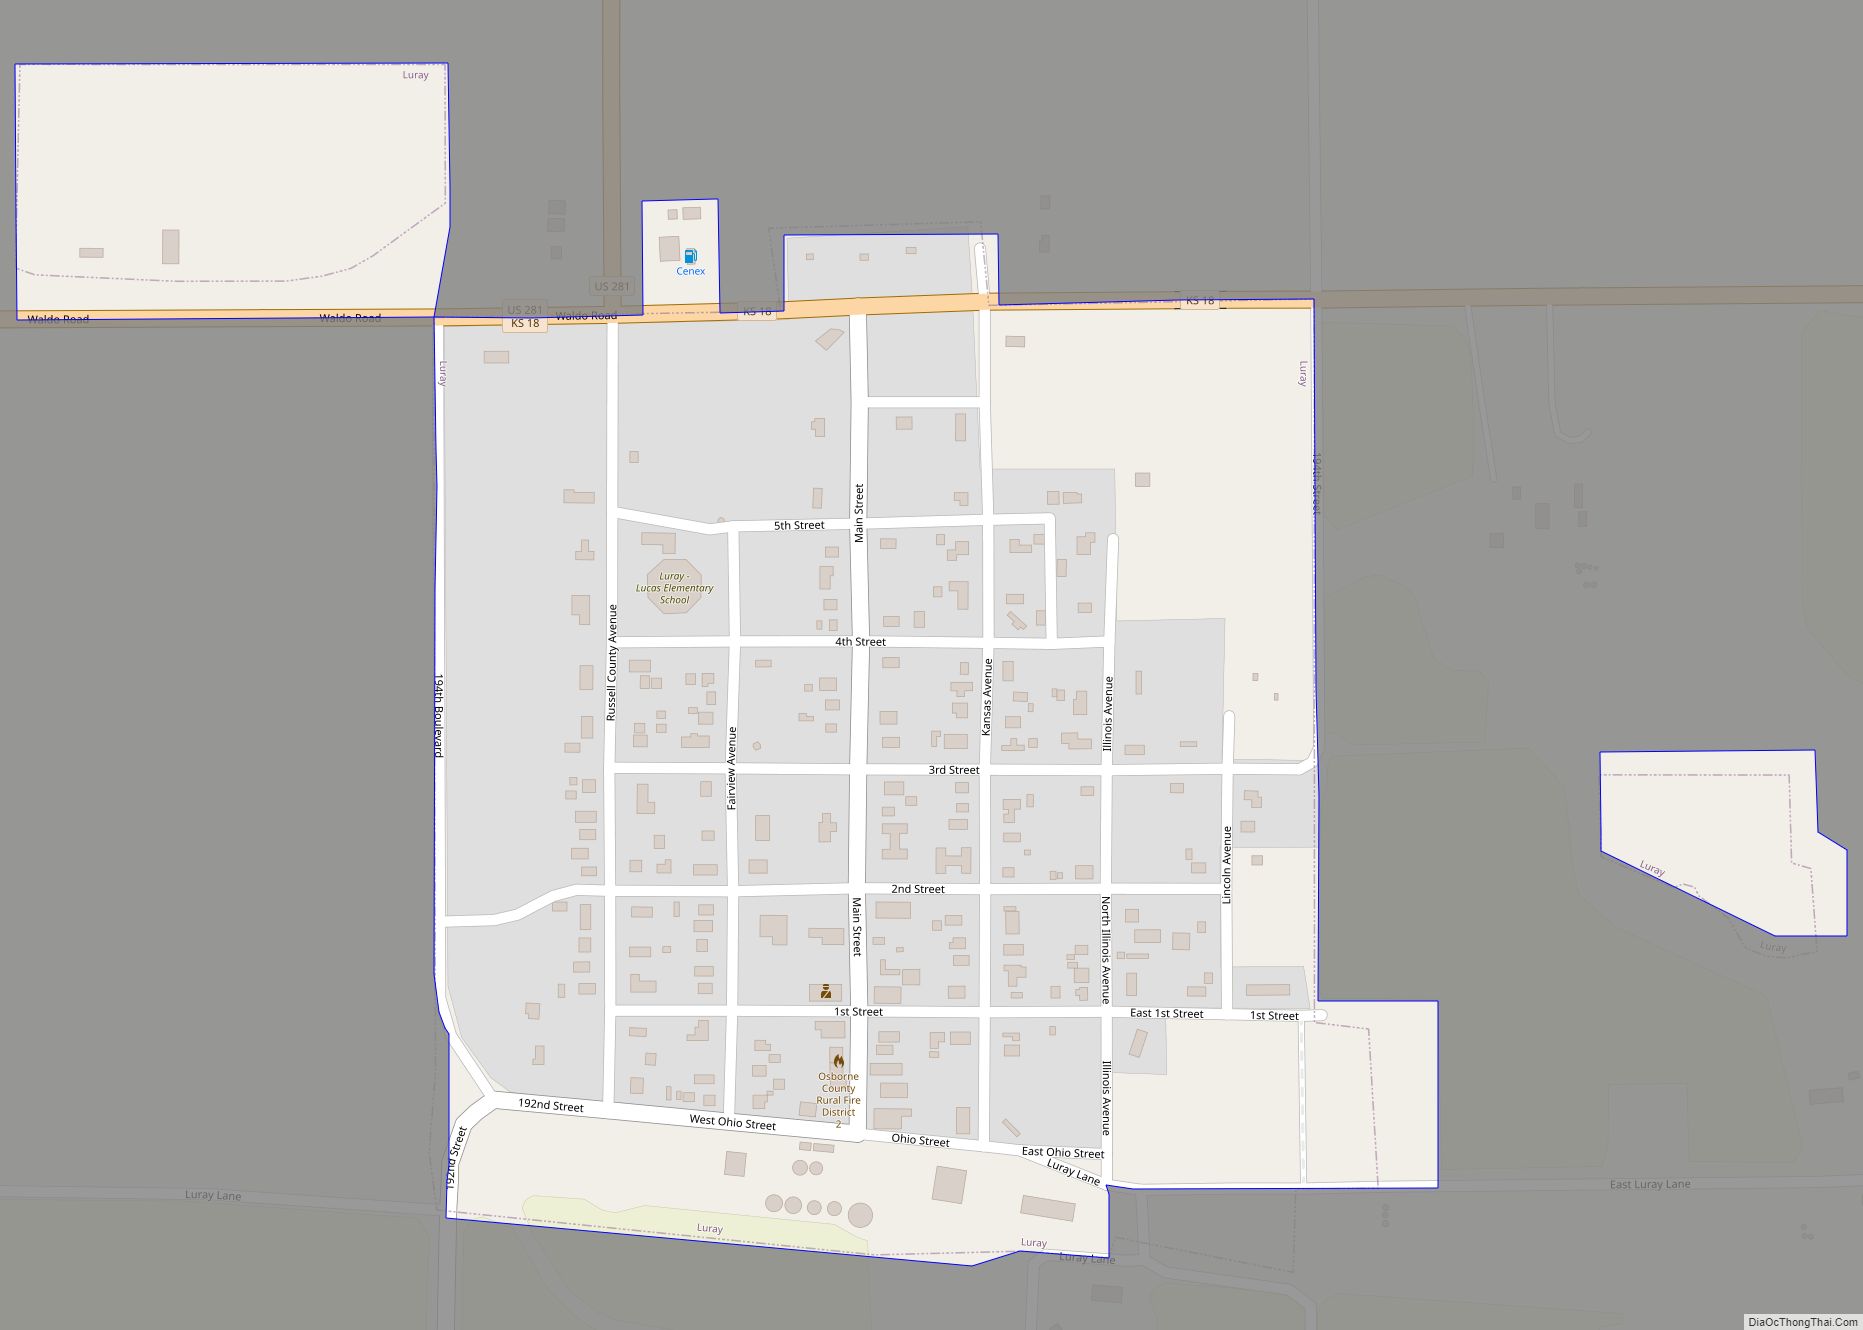 Map of Luray city